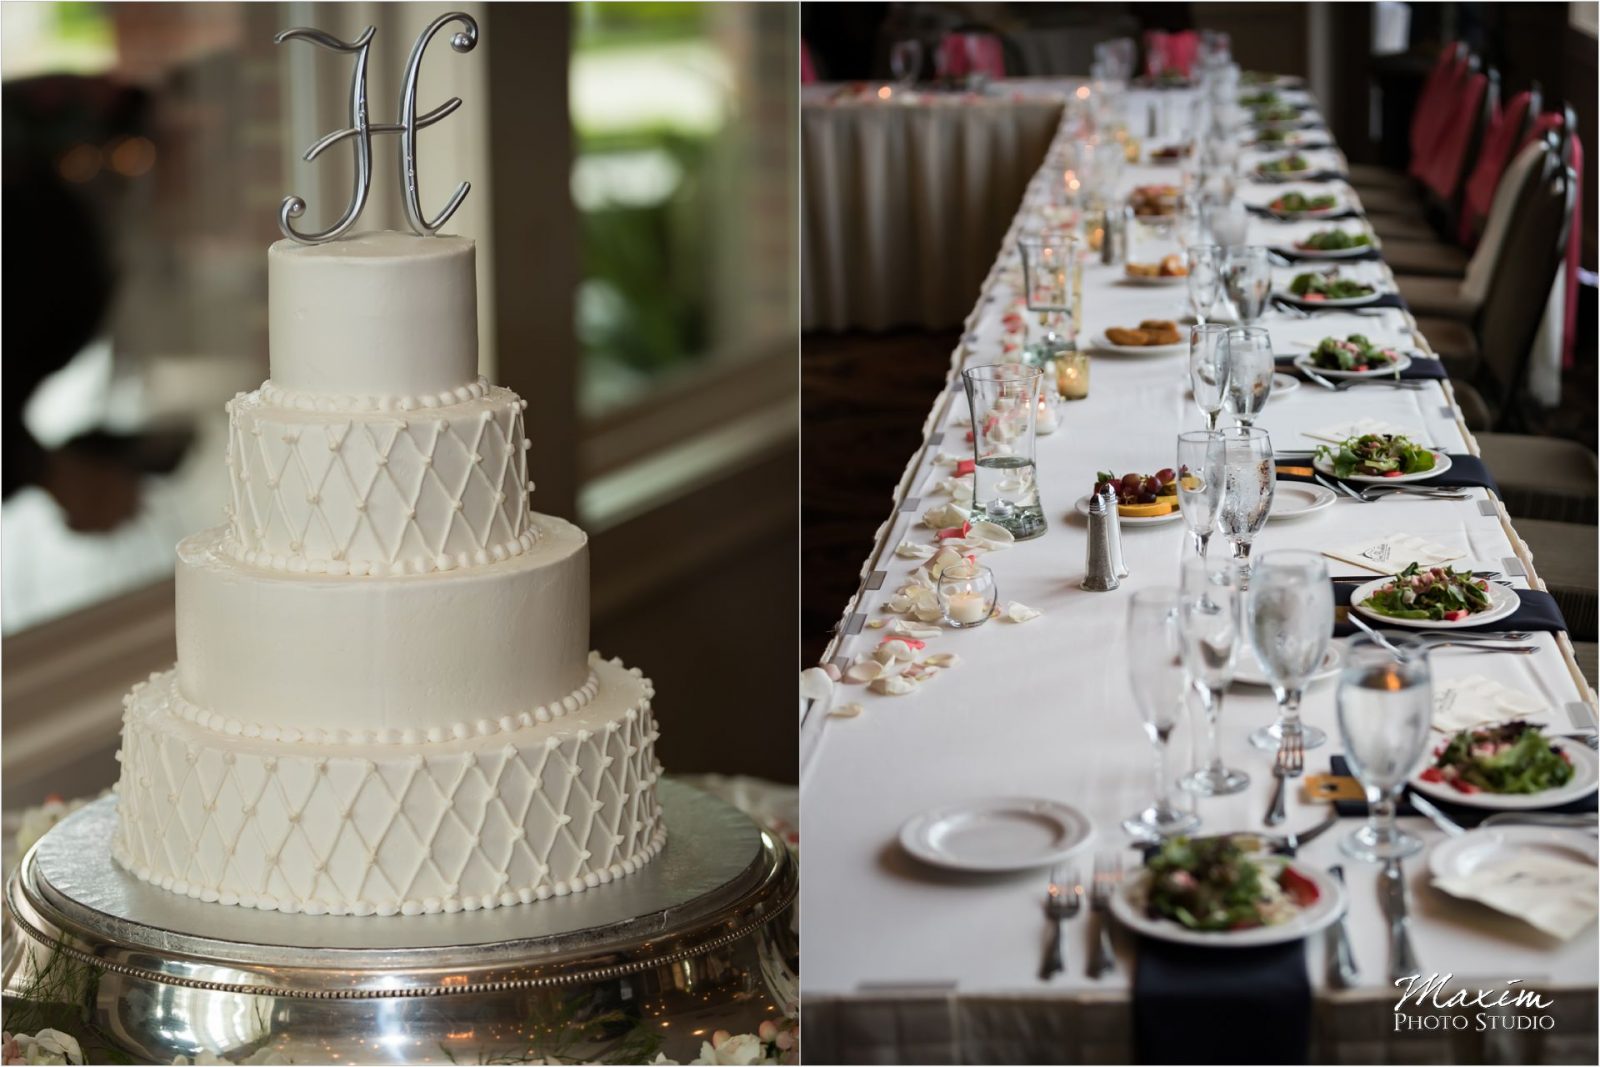 Drees Pavilion Wedding Reception cake